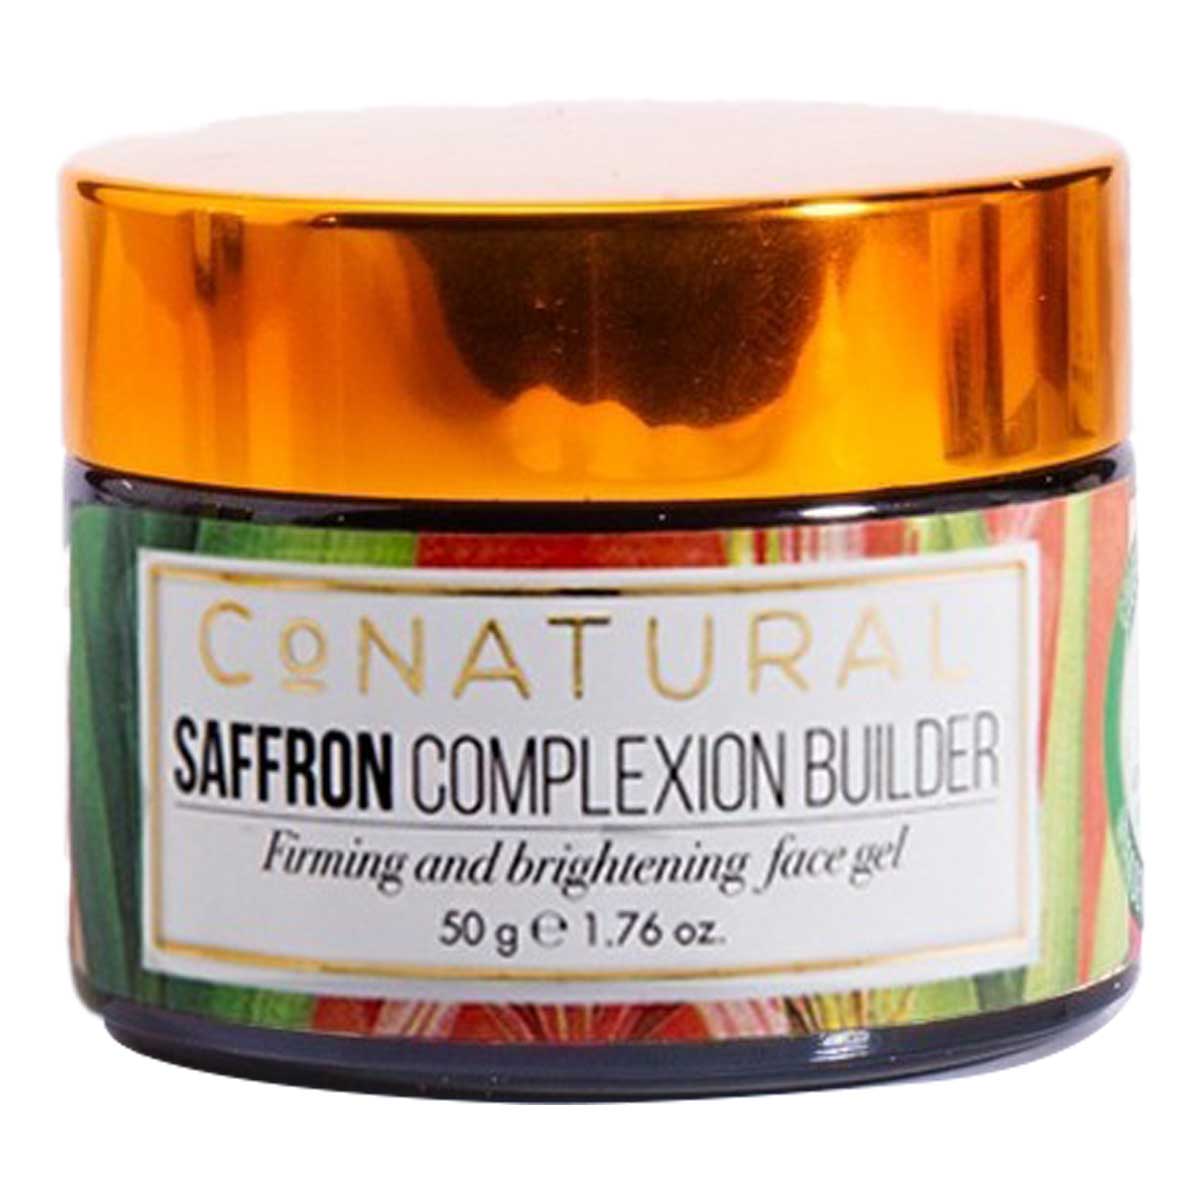 Conatural Saffron Complexion Builder Moisturizer